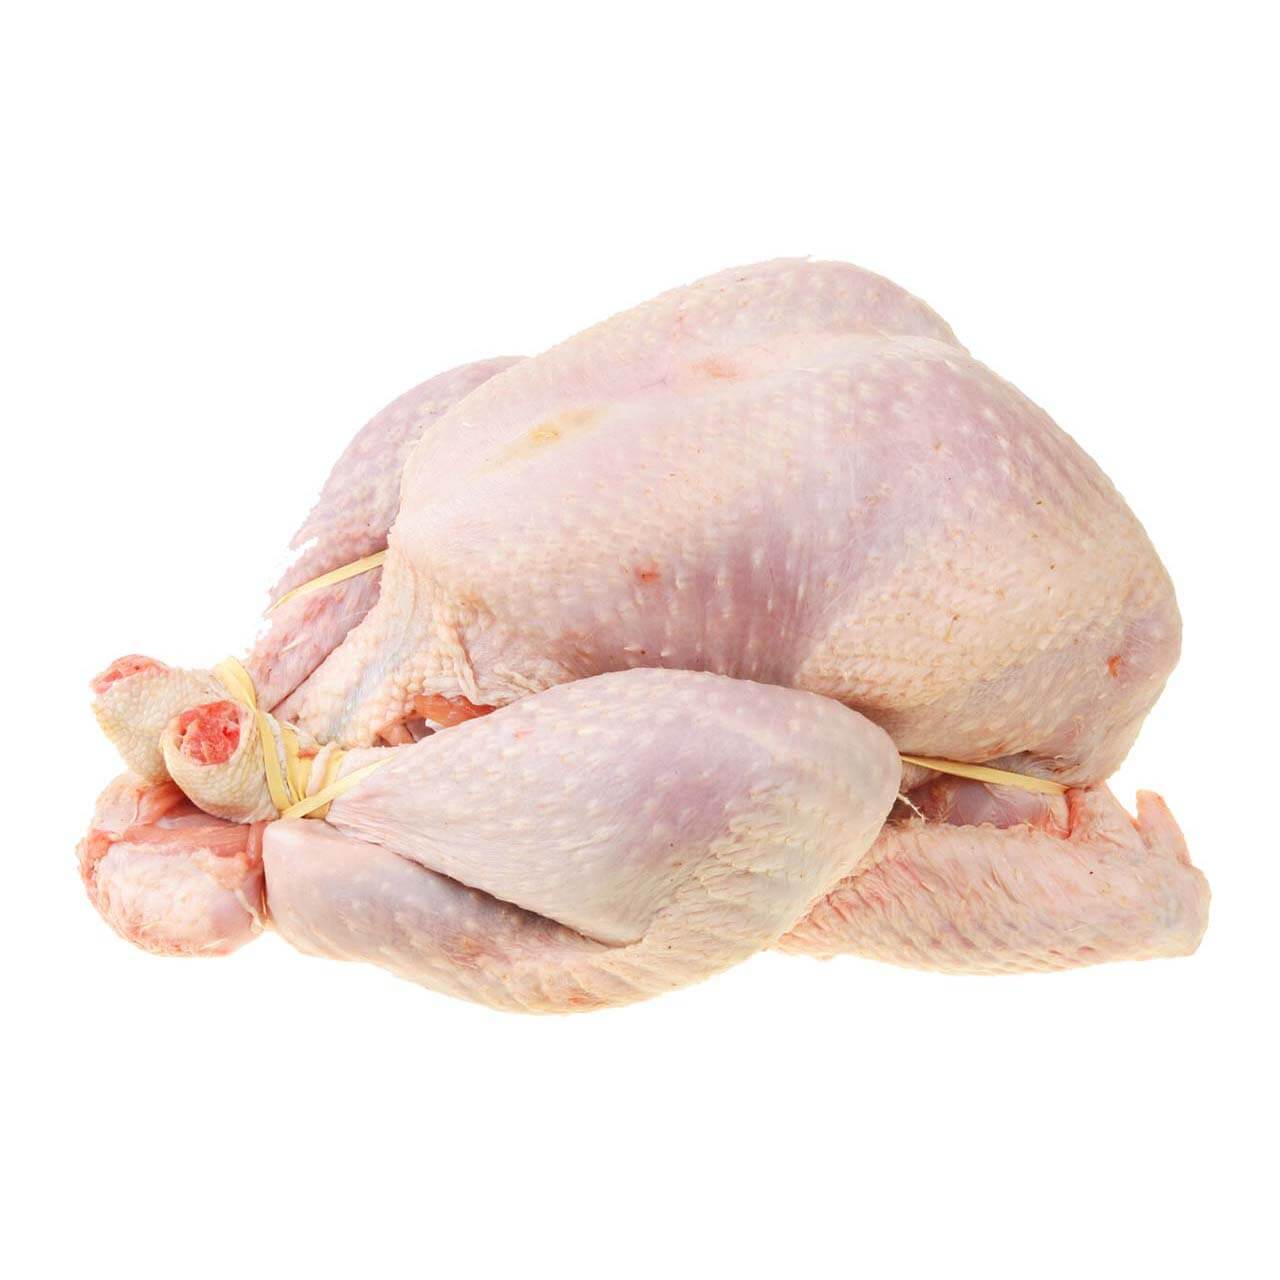 Turkey - Whole Bird - Organic